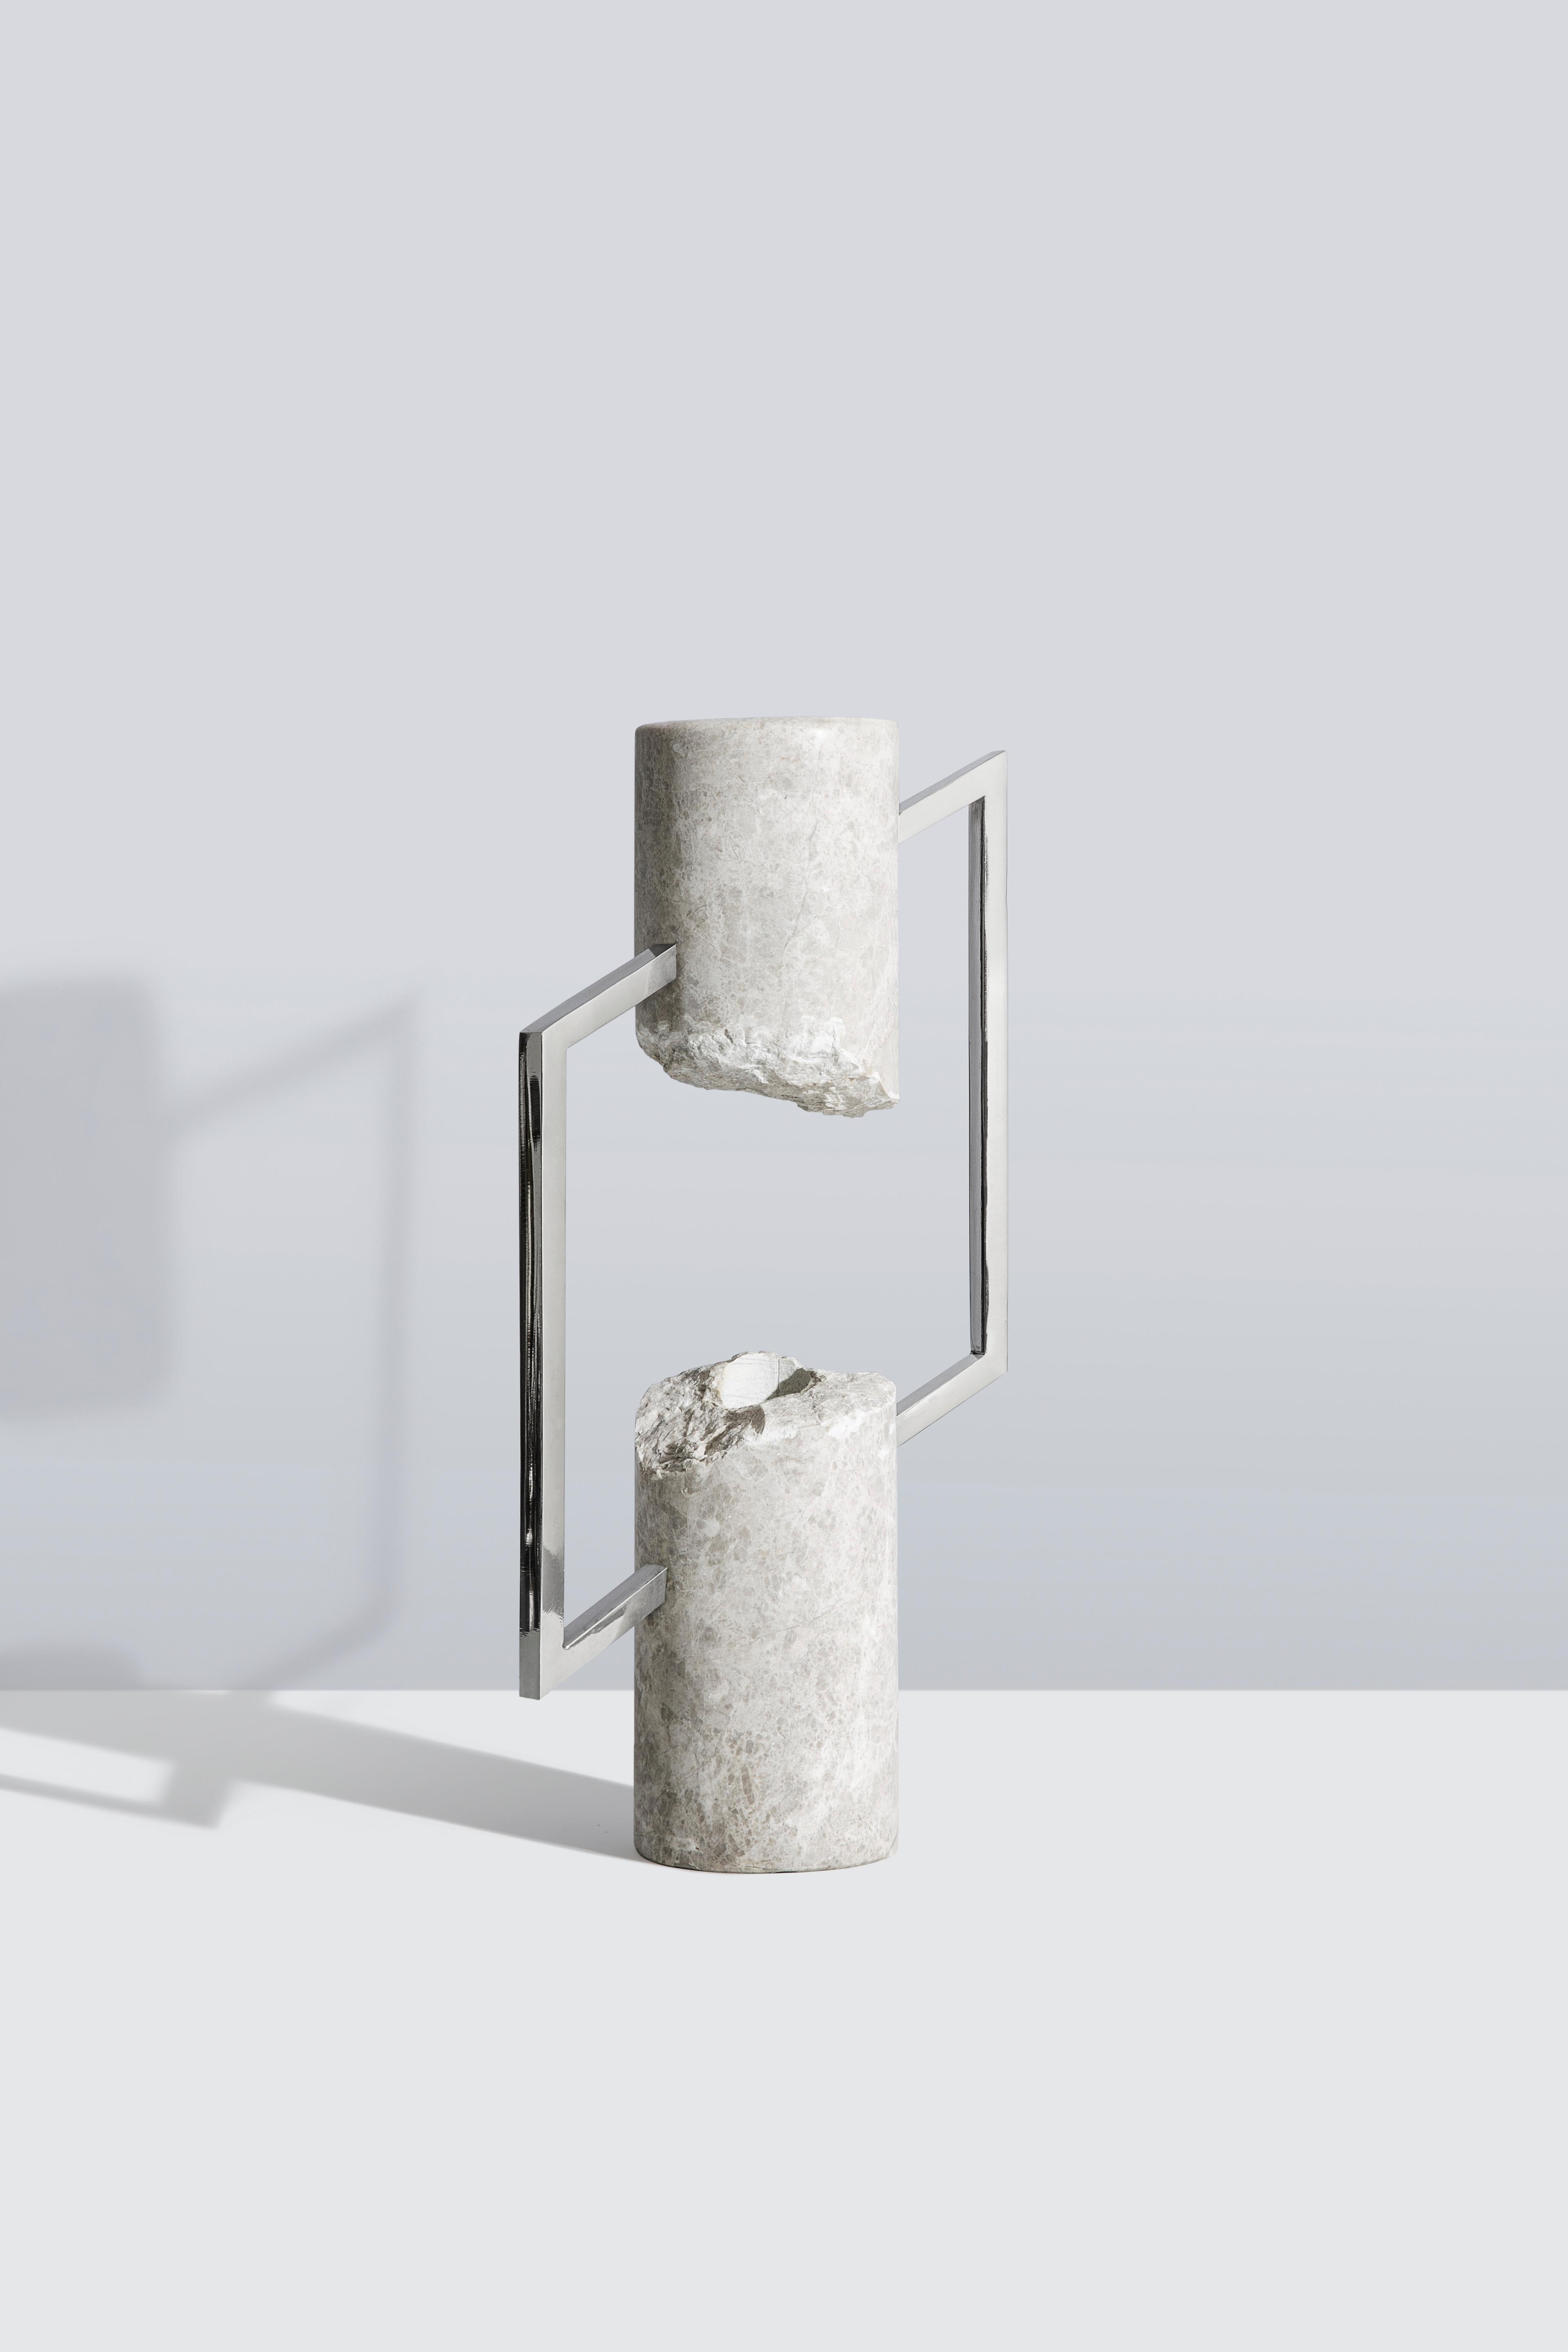 Vase Tohi d'Elham Nejati
Dimensions : Ø 19 x H 34 cm.
Matériaux : Marbre noir, marbre blanc, laiton, acier inoxydable.

Elham Nejati :
